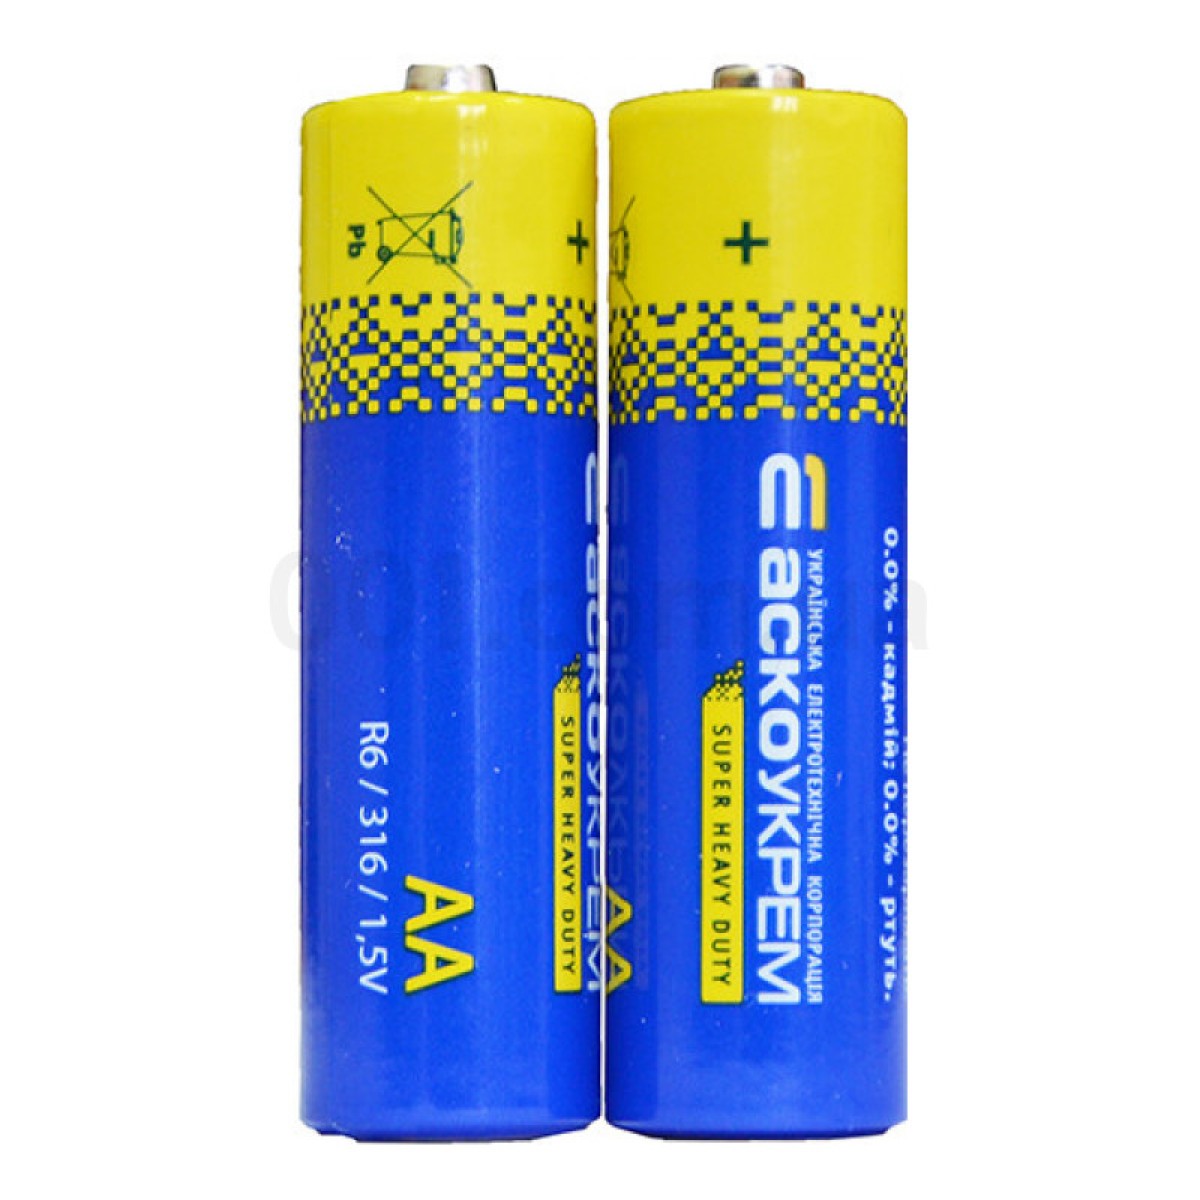 Батарейка сольова АА.R6.SP2, типорозмір AA упаковка shrink 2 шт., АСКО-УКРЕМ 256_256.jpg